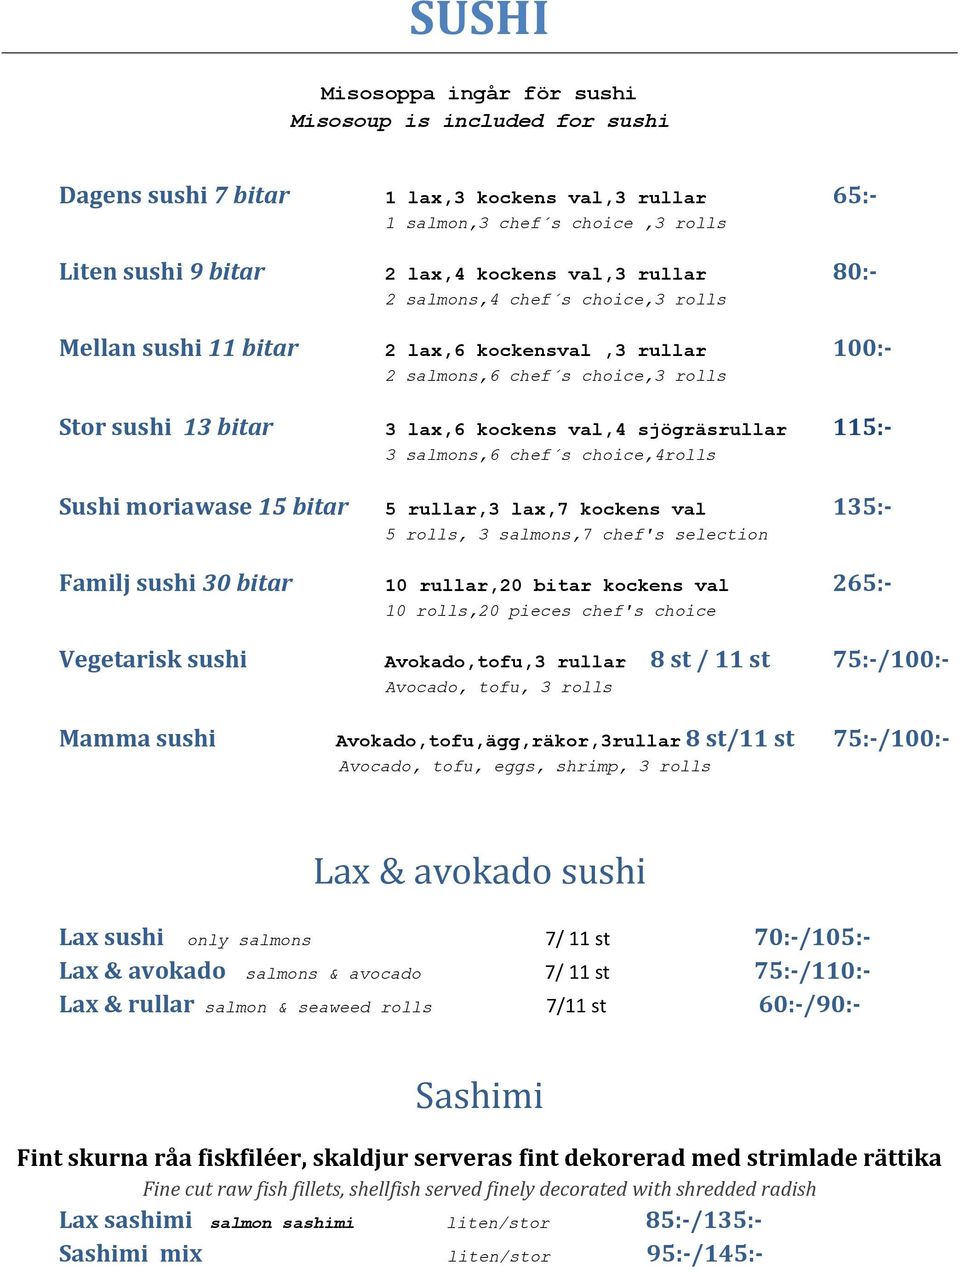 salmons,6 chef s choice,4rolls Sushi moriawase 15 bitar 5 rullar,3 lax,7 kockens val 135:- 5 rolls, 3 salmons,7 chef's selection Familj sushi 30 bitar 10 rullar,20 bitar kockens val 265:- 10 rolls,20